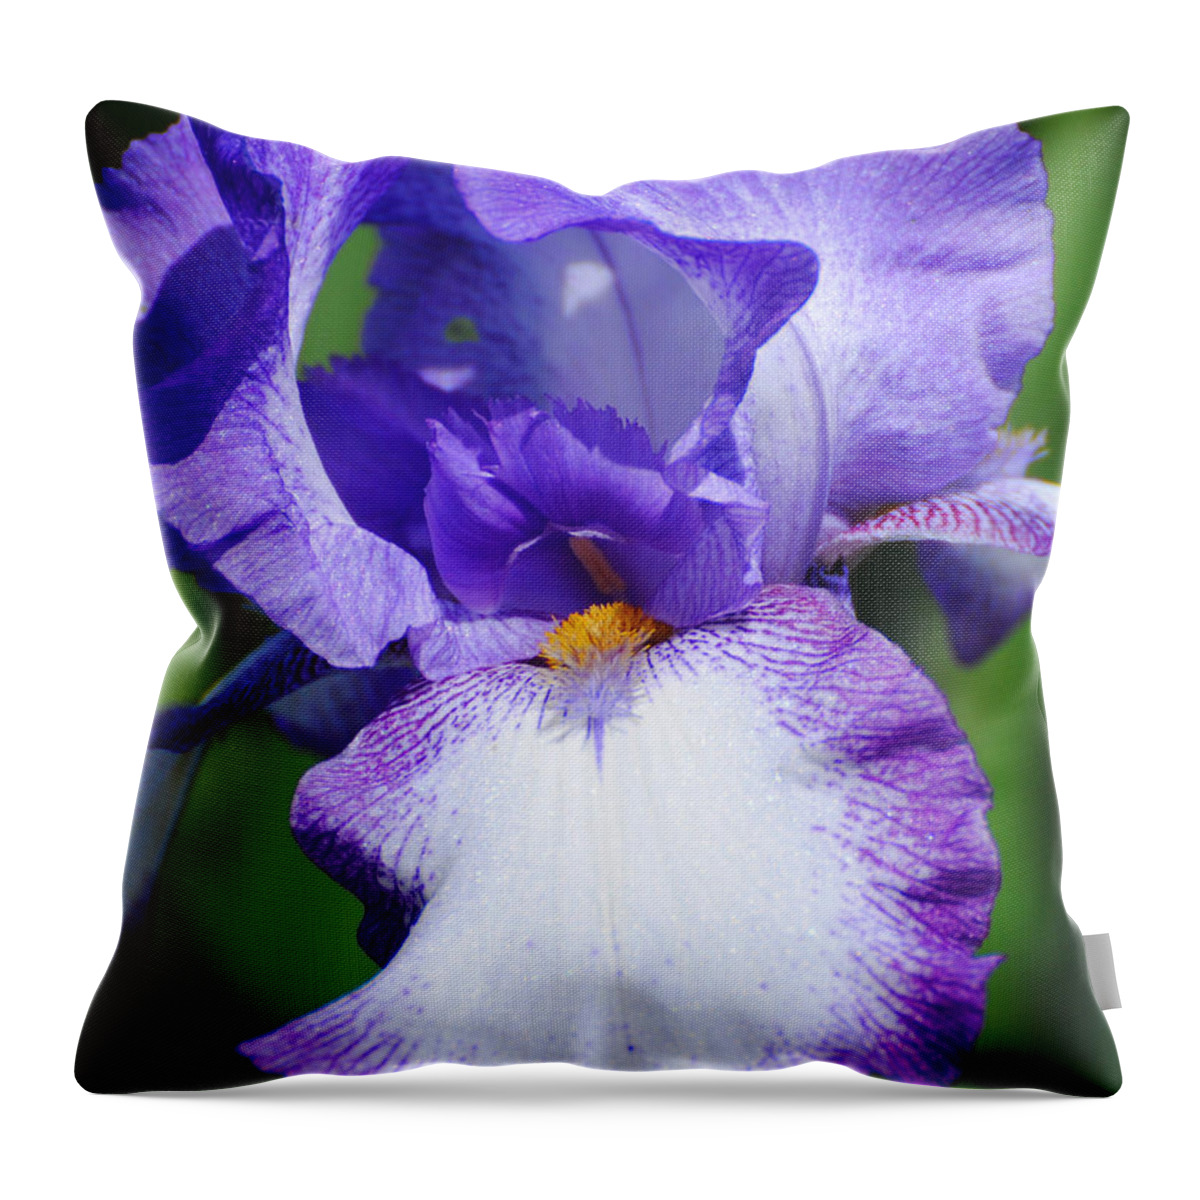 Beautiful Iris Throw Pillow featuring the photograph Purple and White Iris Flower by Jai Johnson